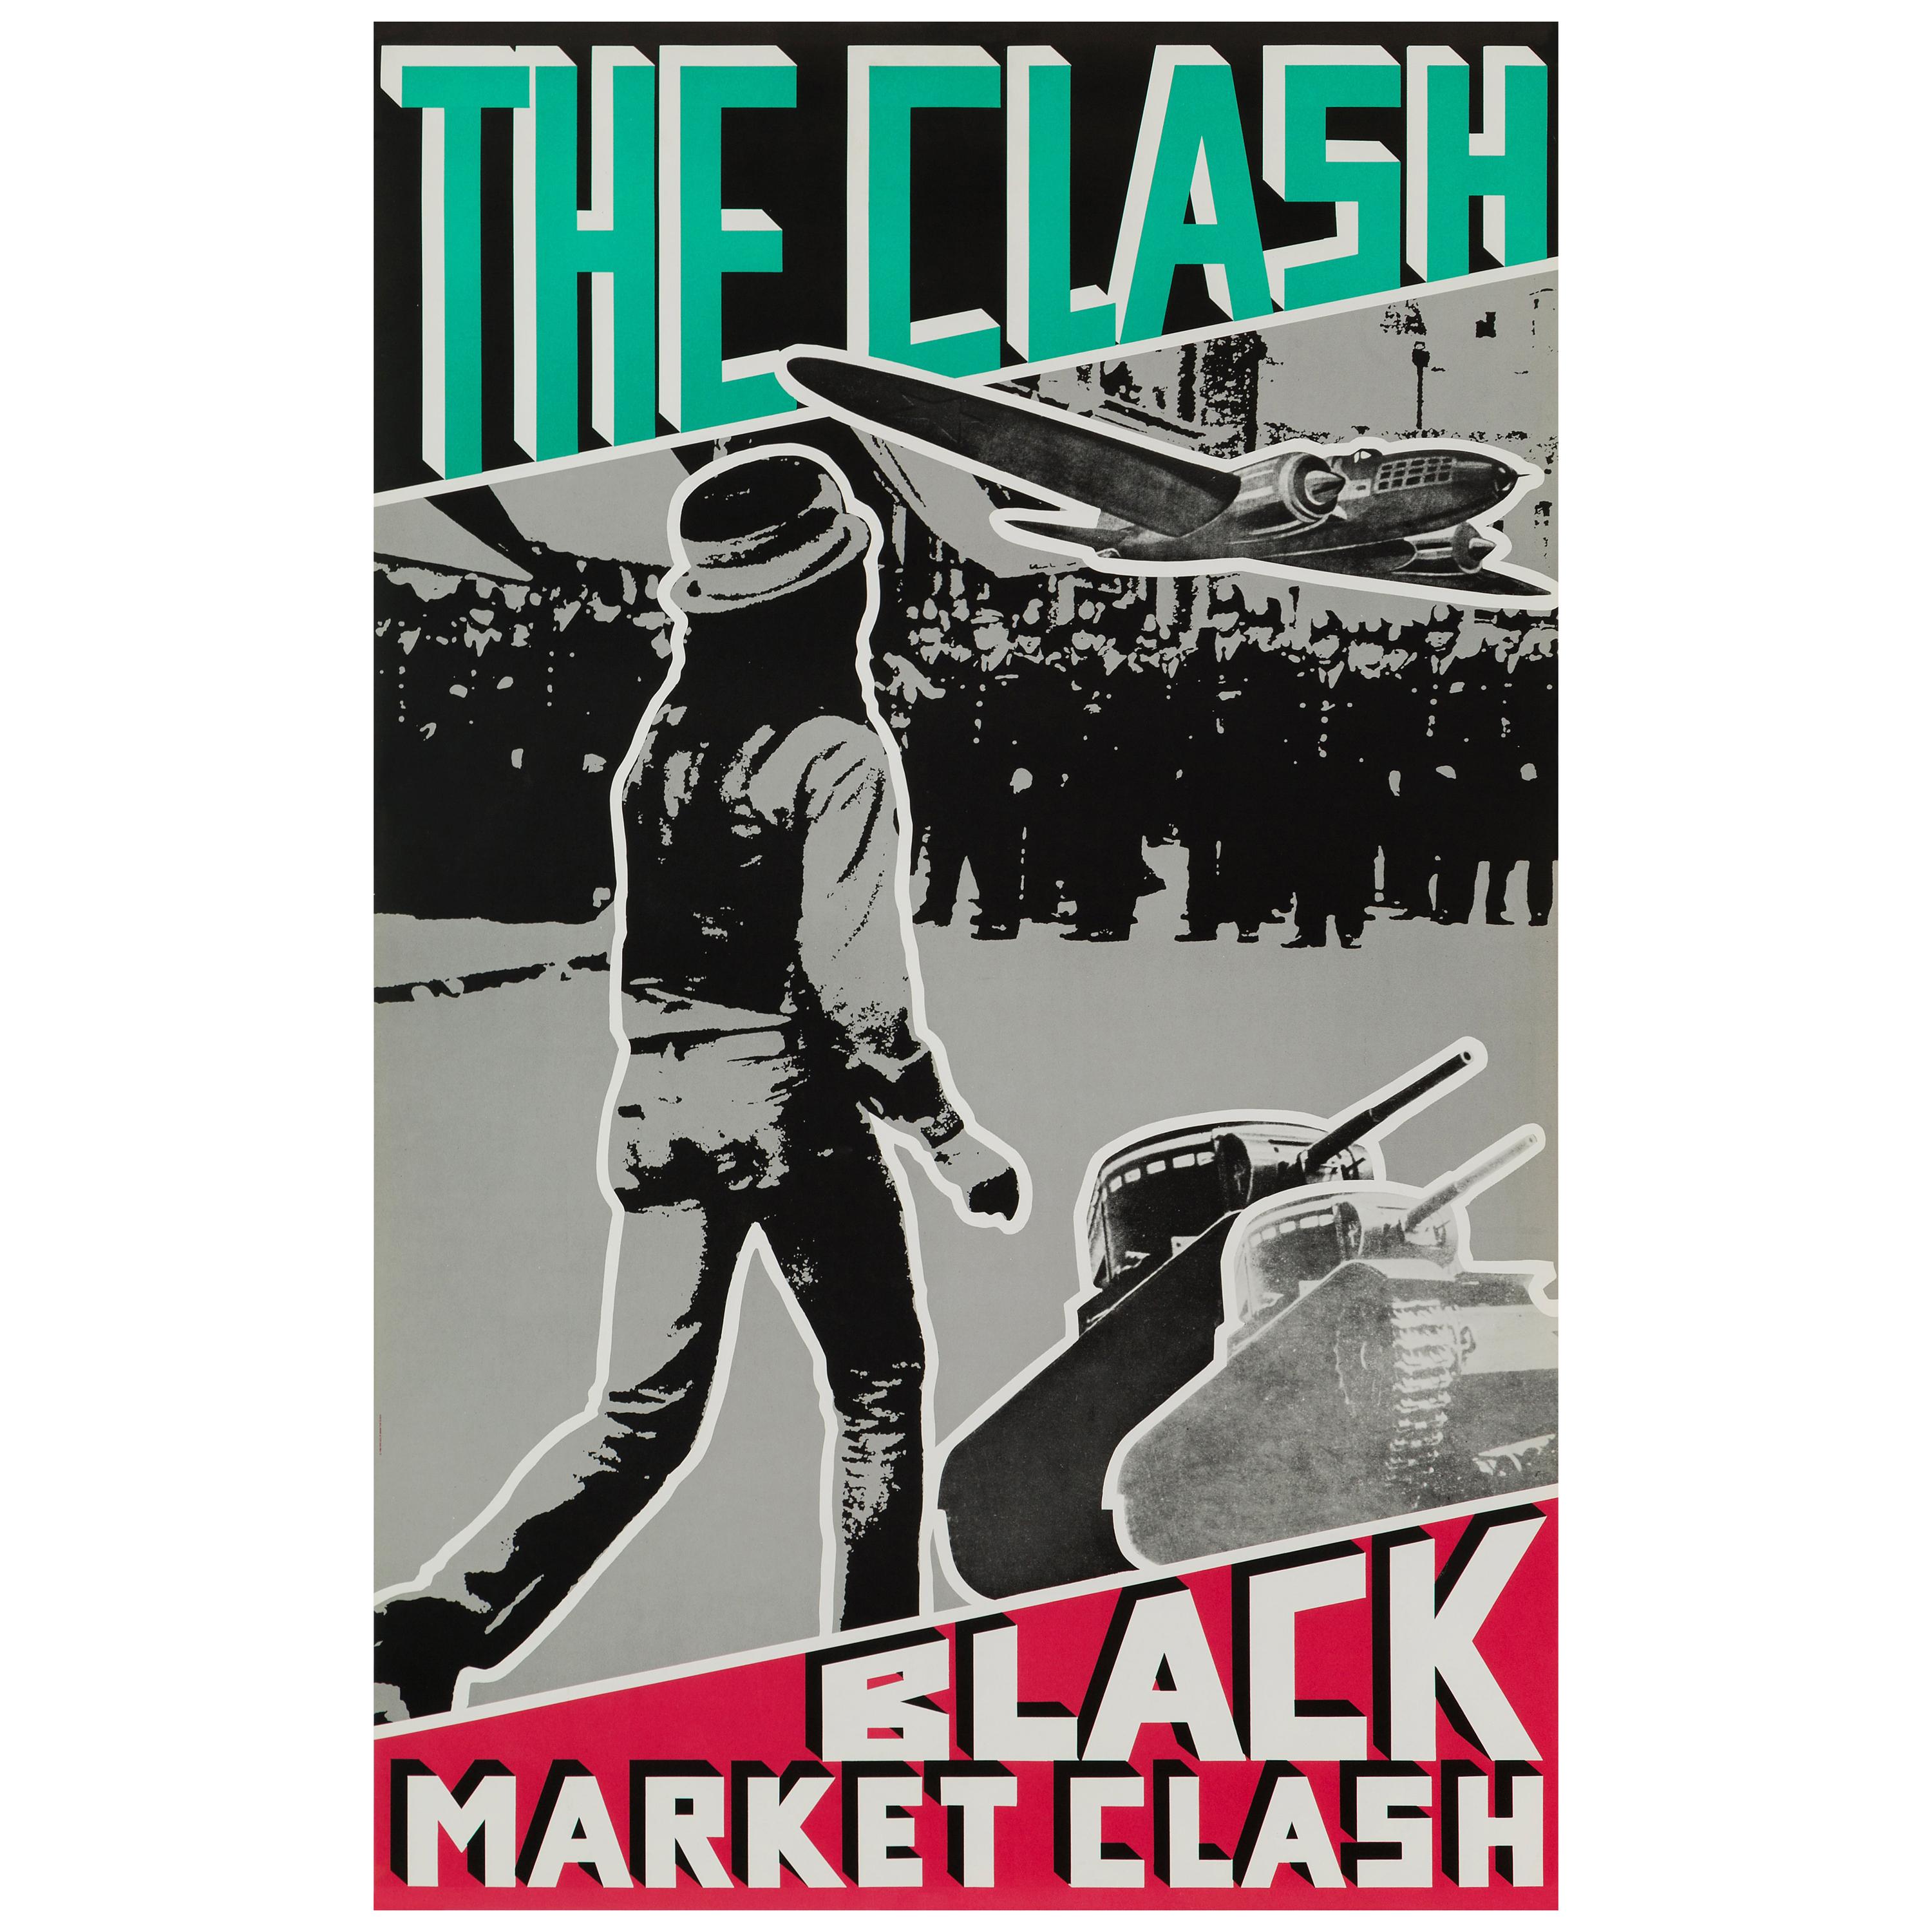 The Clash "Black Market Clash" Original Vintage Promotional Poster, US, 1980